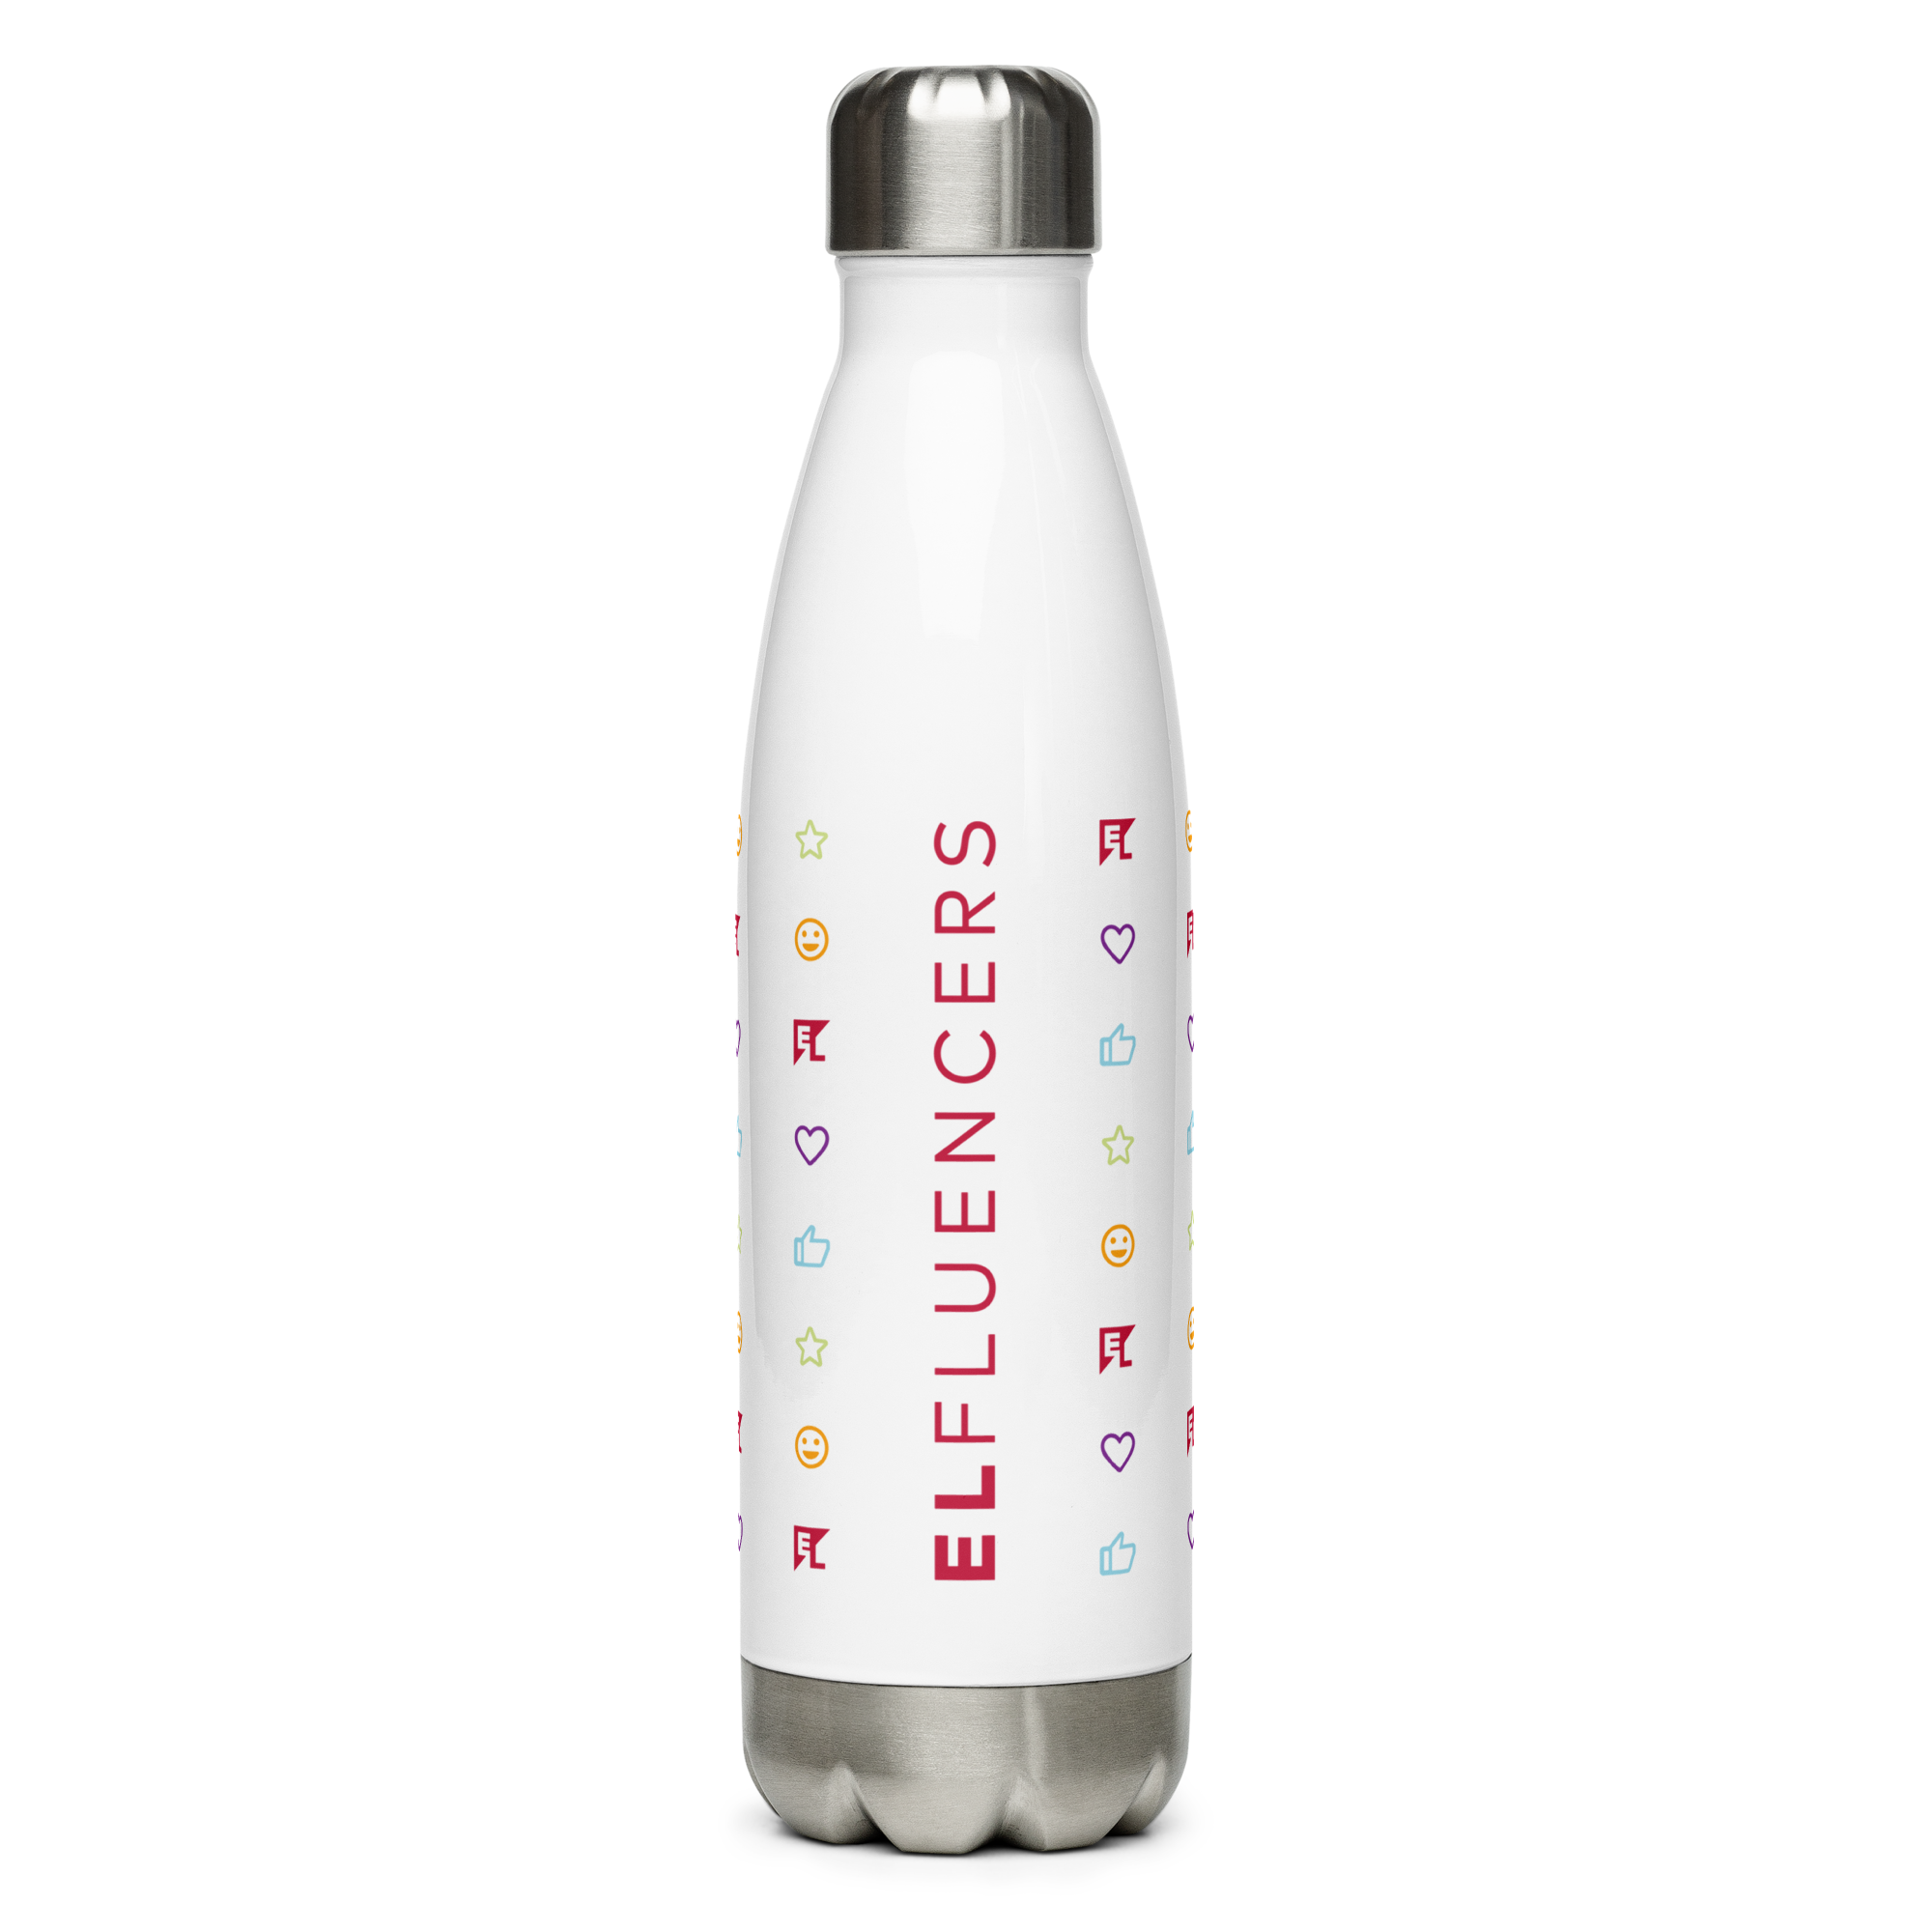 ELfluencers water bottle